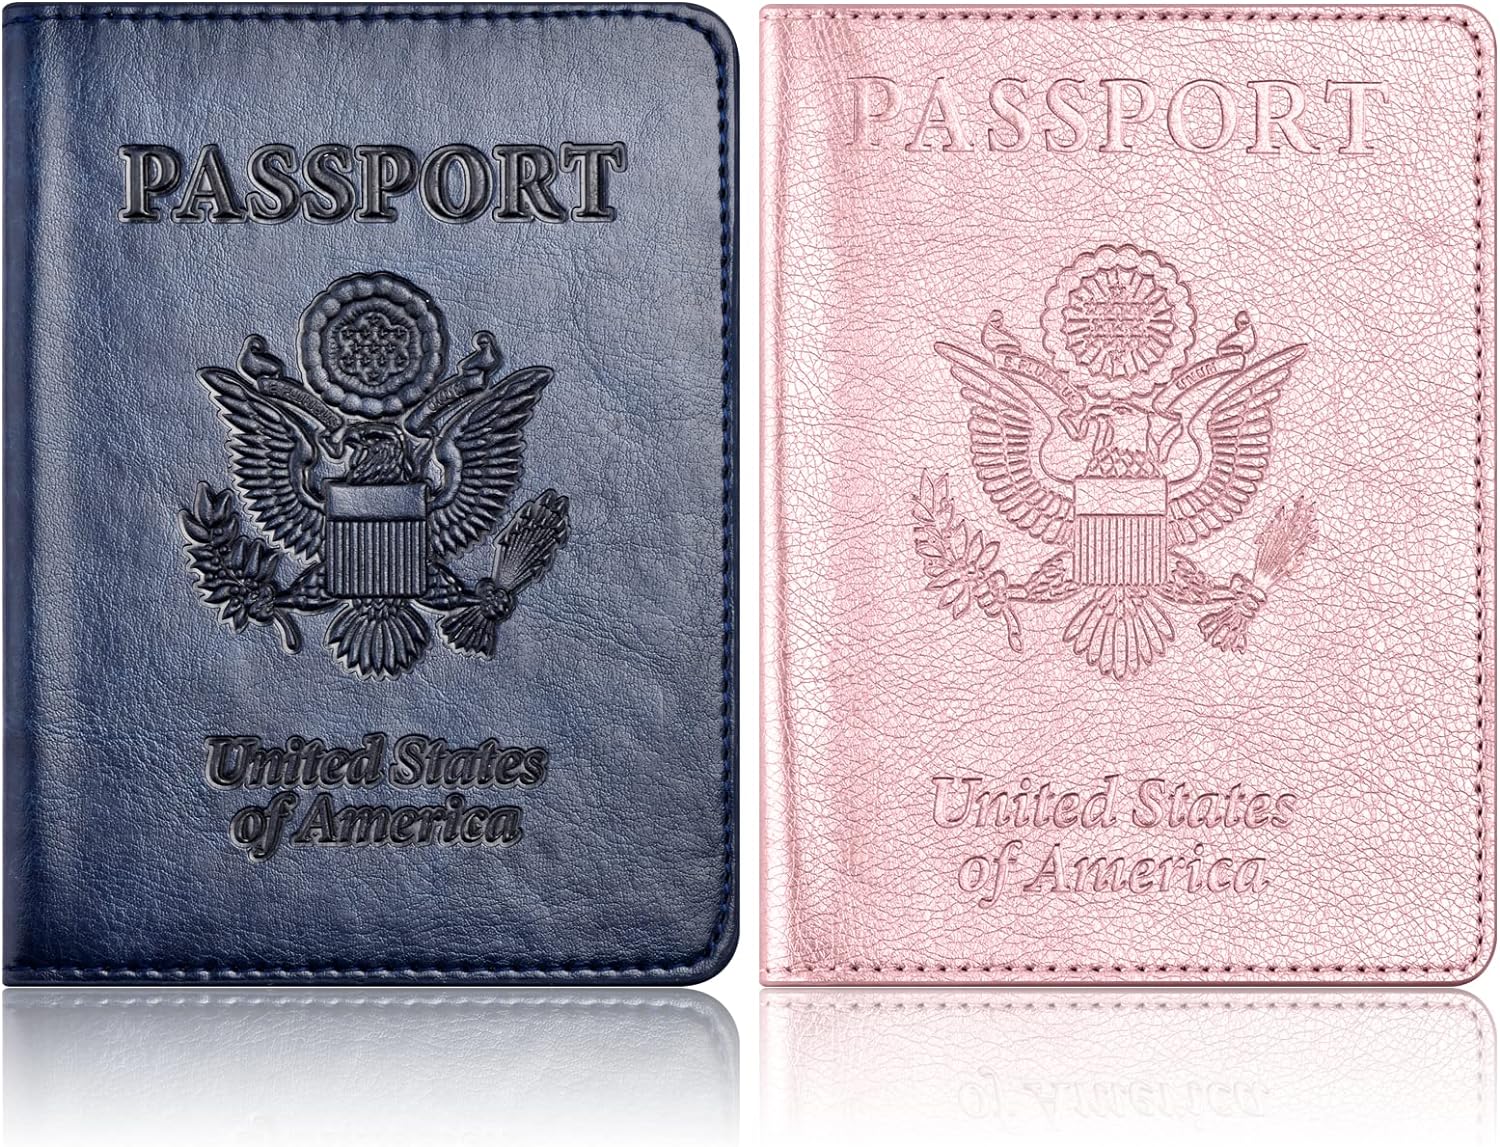 2Pack Passport Holder with Vaccine Card Holder Slot, Passport Wallet, Passport Cover Case for Women Men (CA-Dark blue+Rose gold)